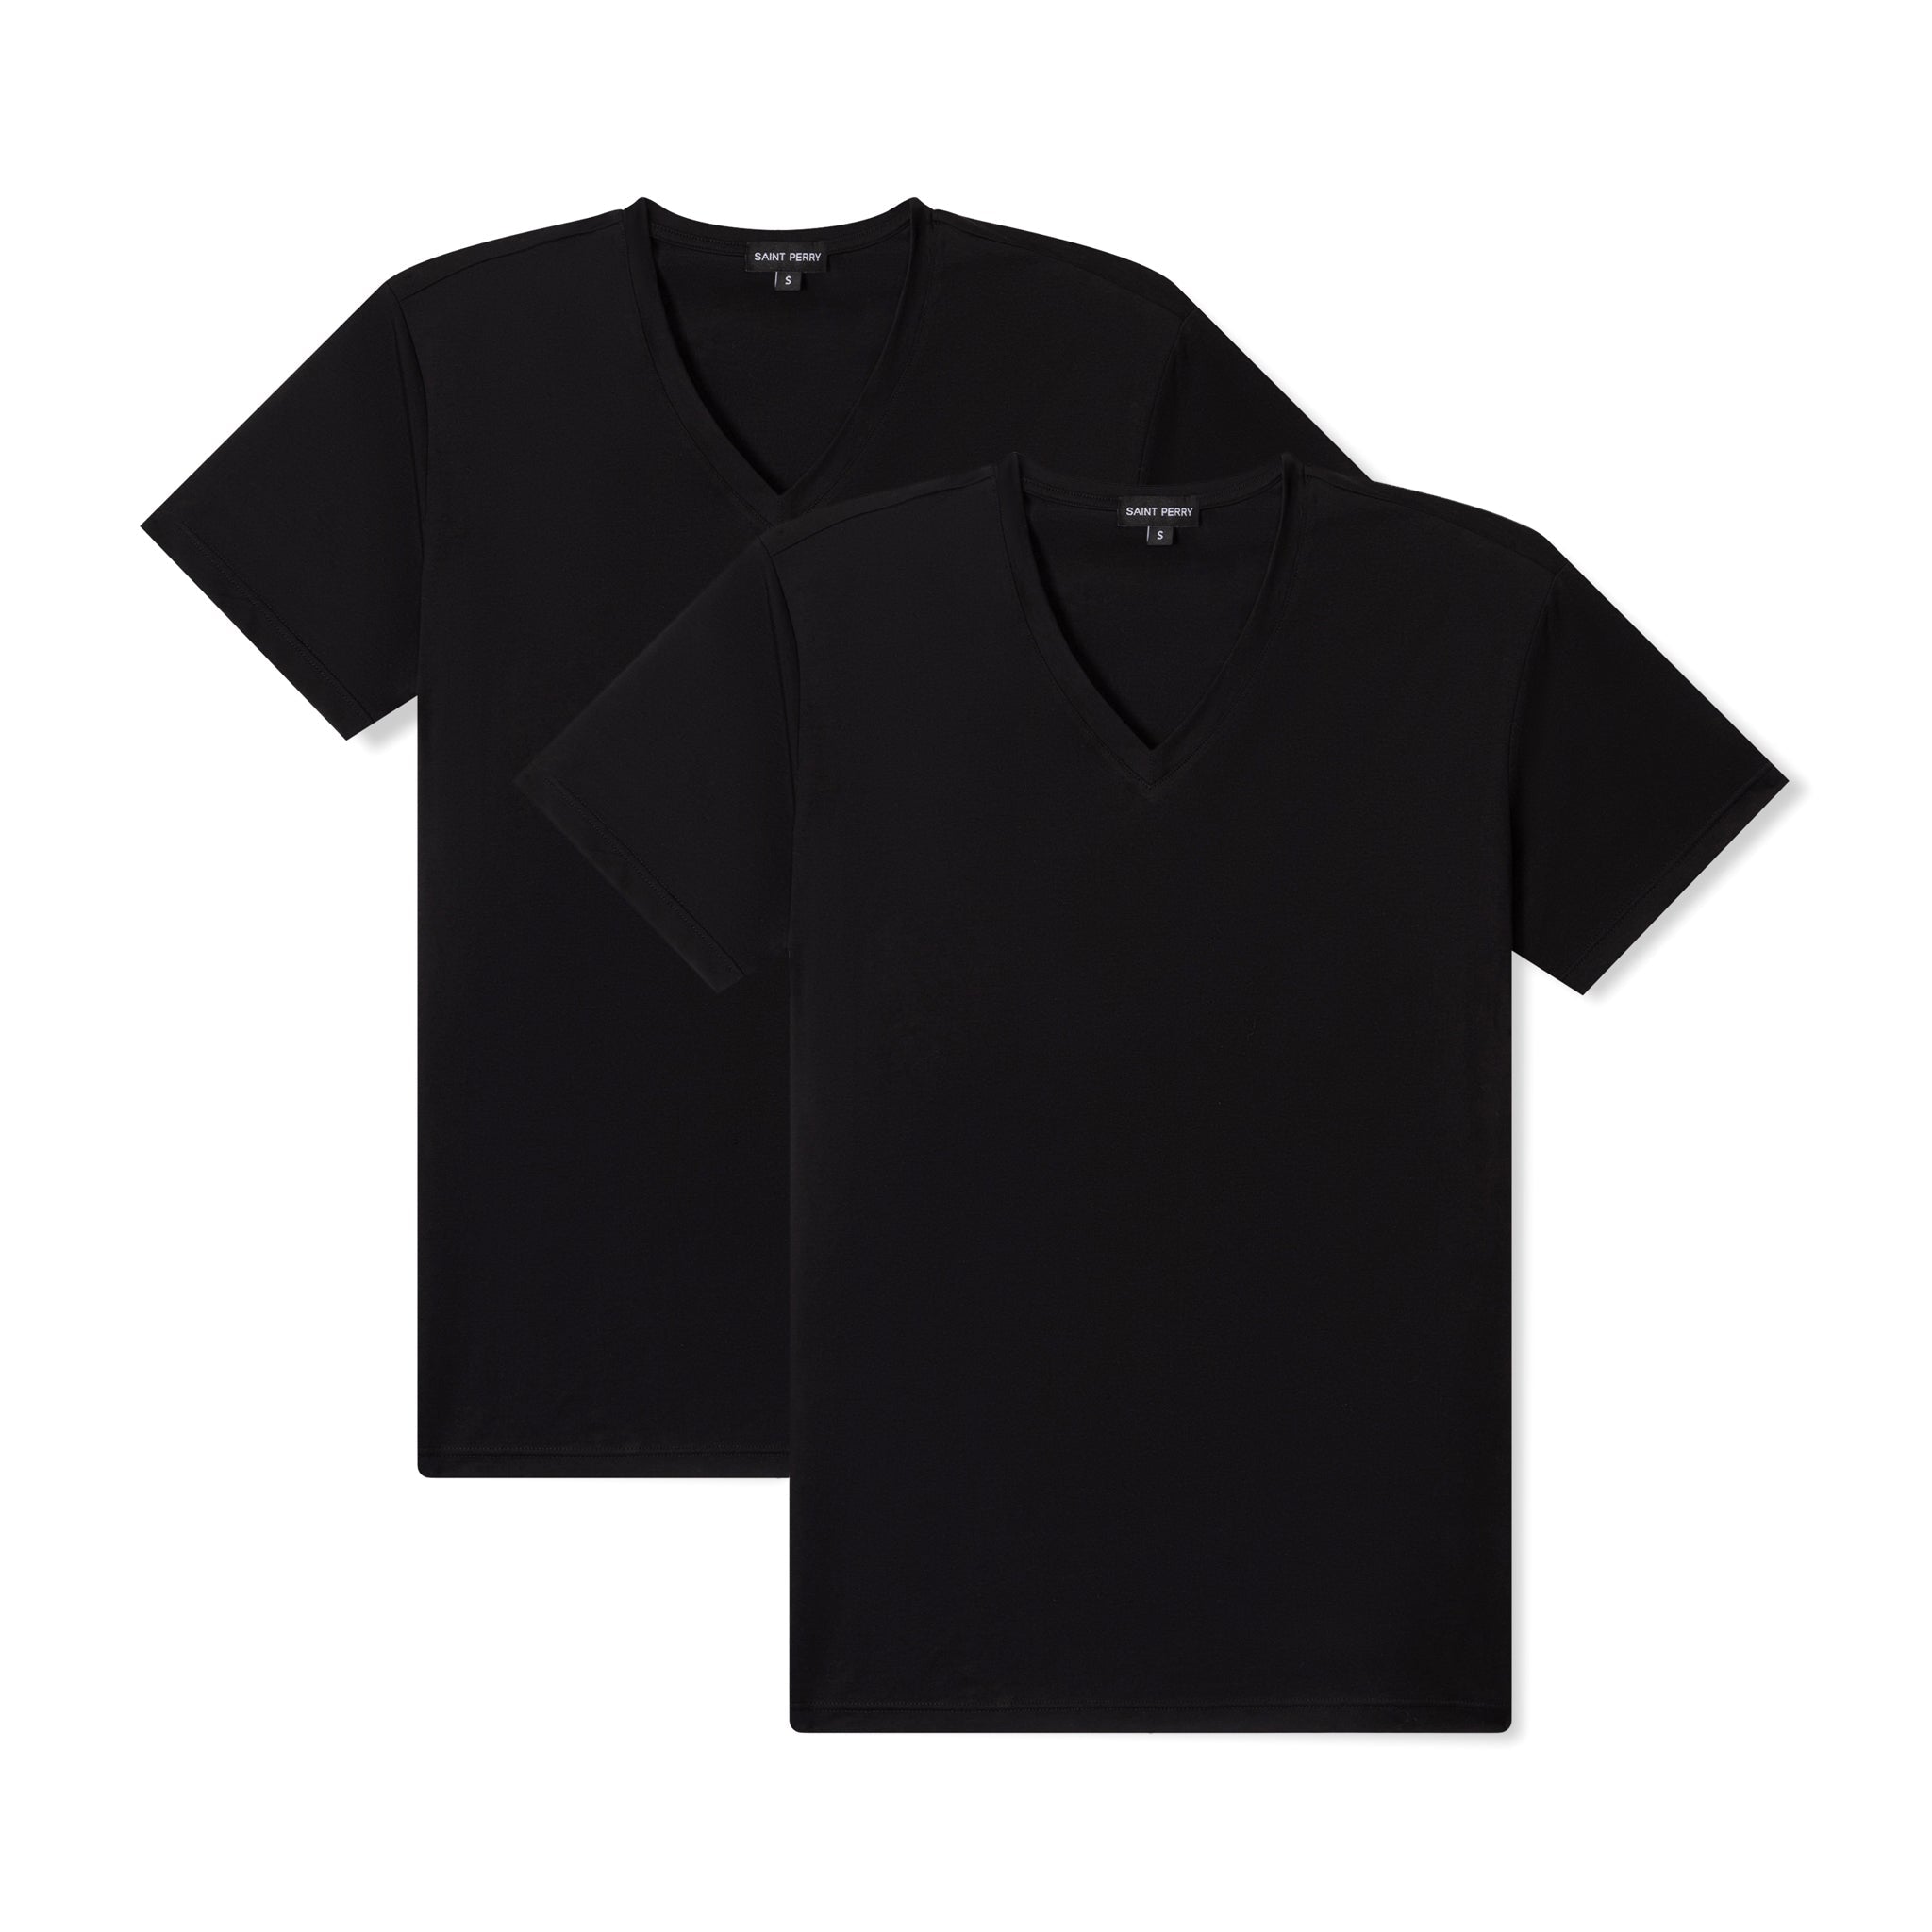 Men's V-Neck Black T-Shirt 2 Pack - SAINT PERRY